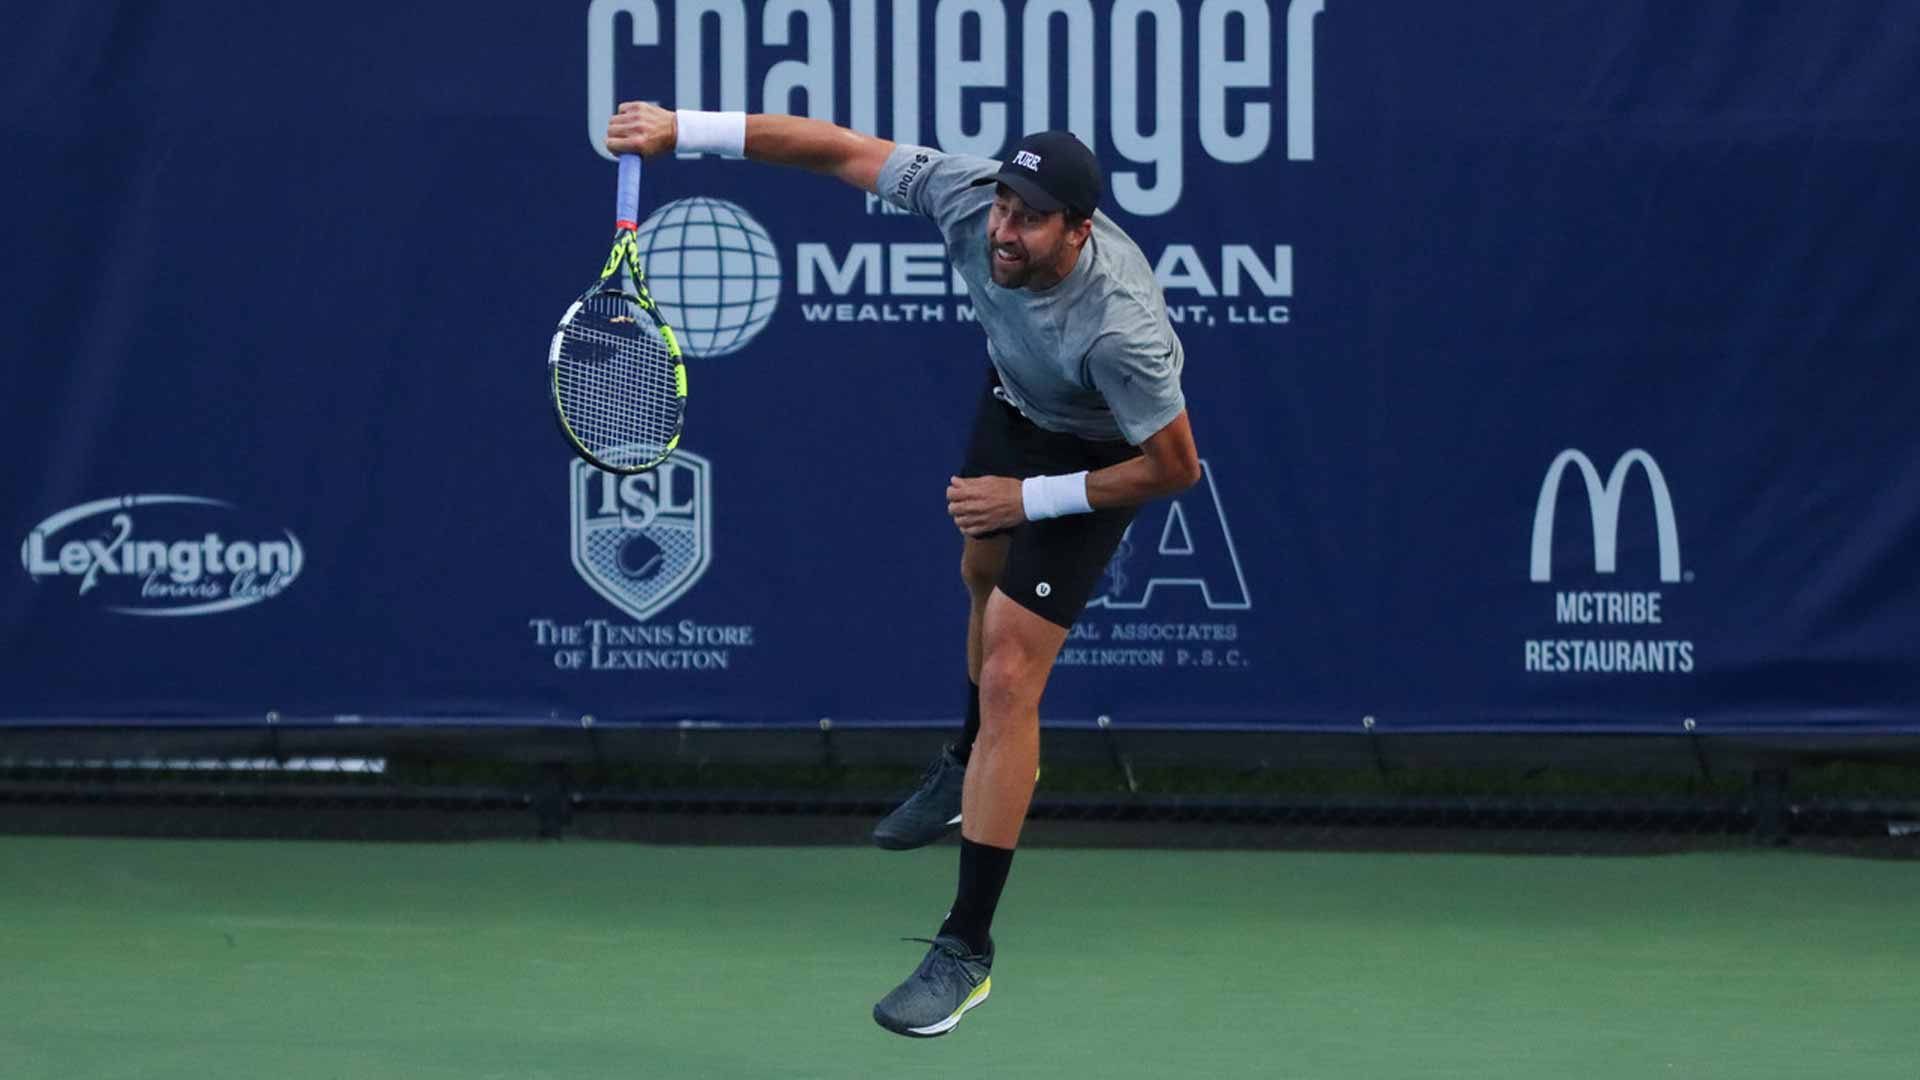 Steve Johnson wins the ATP Challenger 75 event in Lexington, Kentucky.